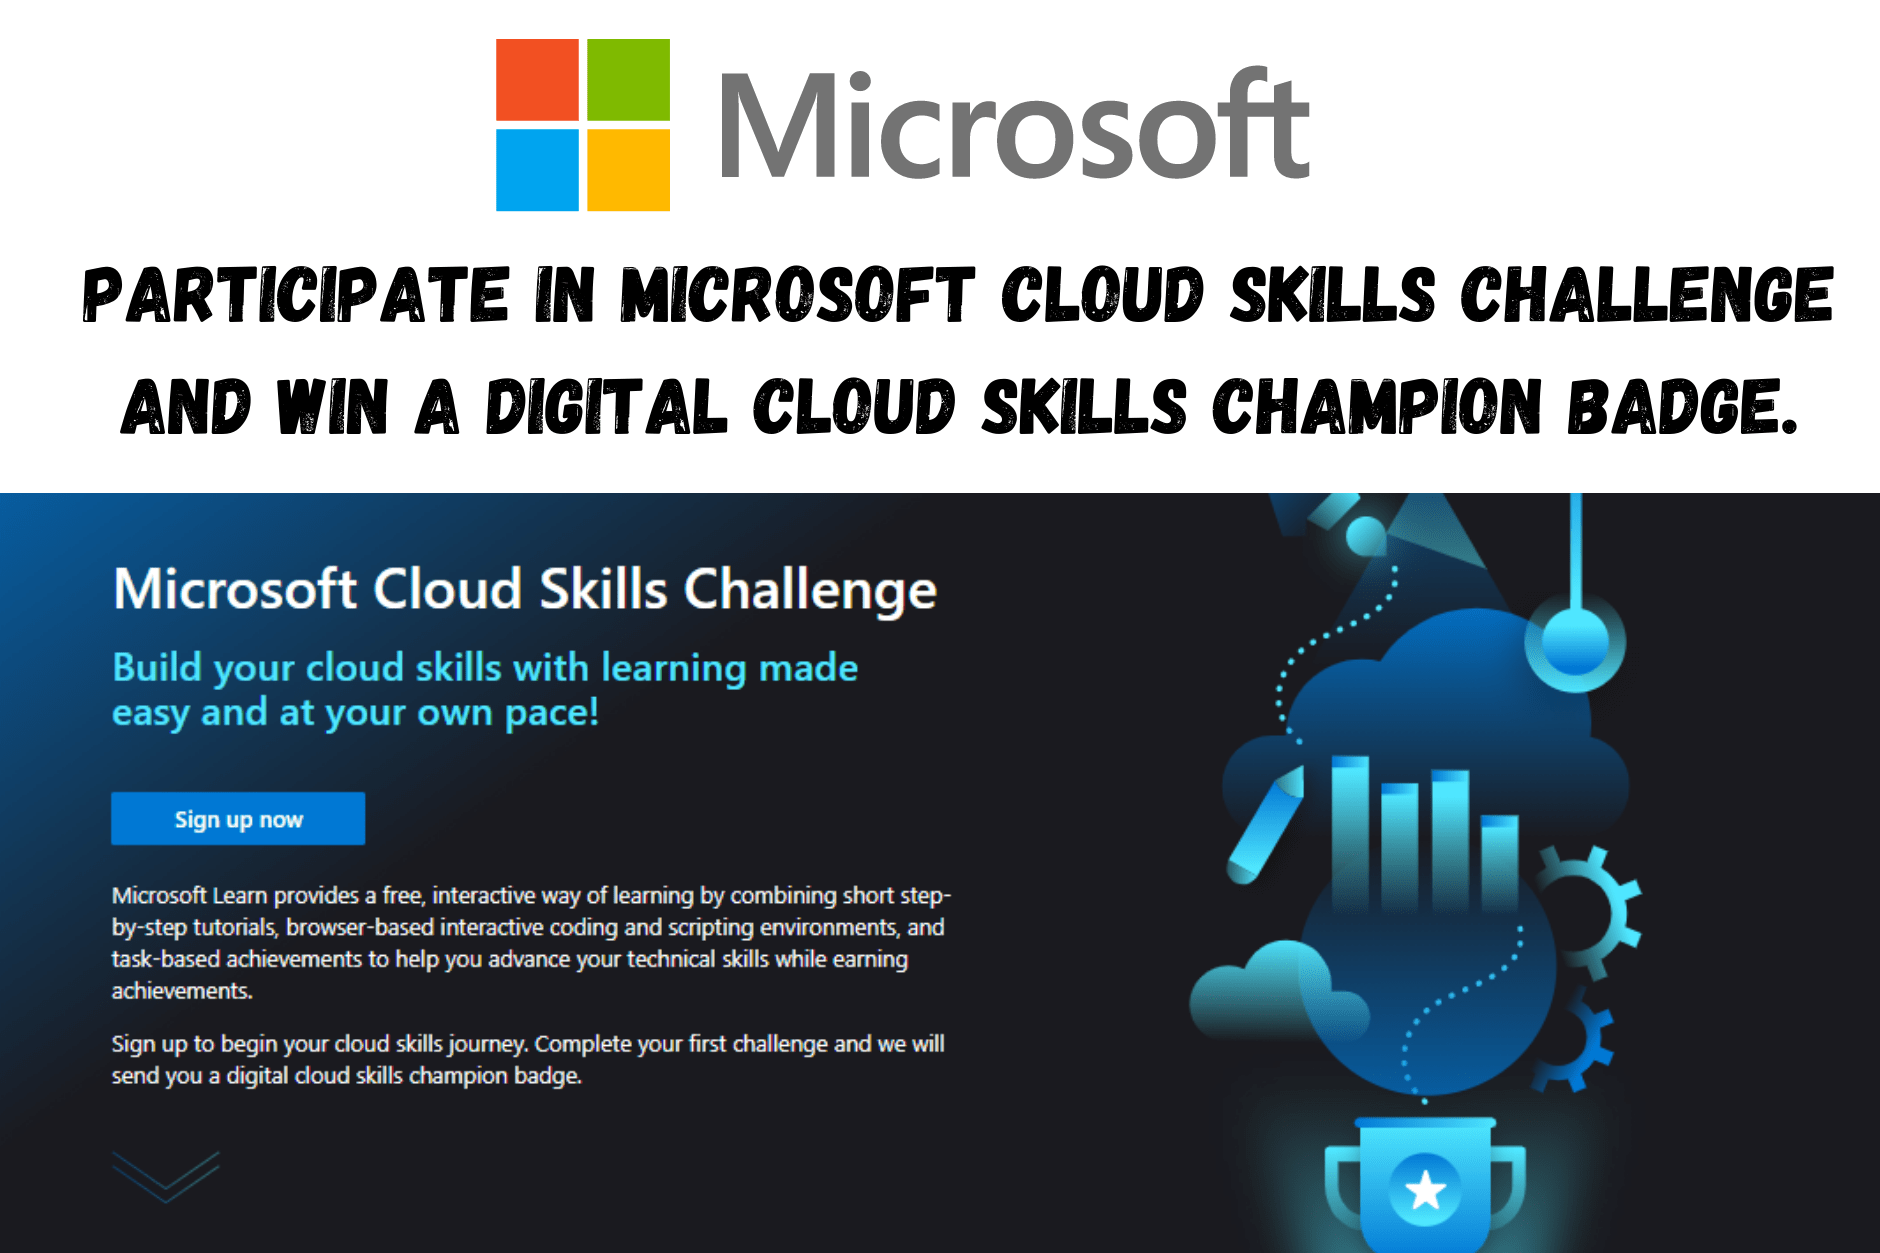 Participate in Microsoft Cloud Skills Challenge and win a digital cloud